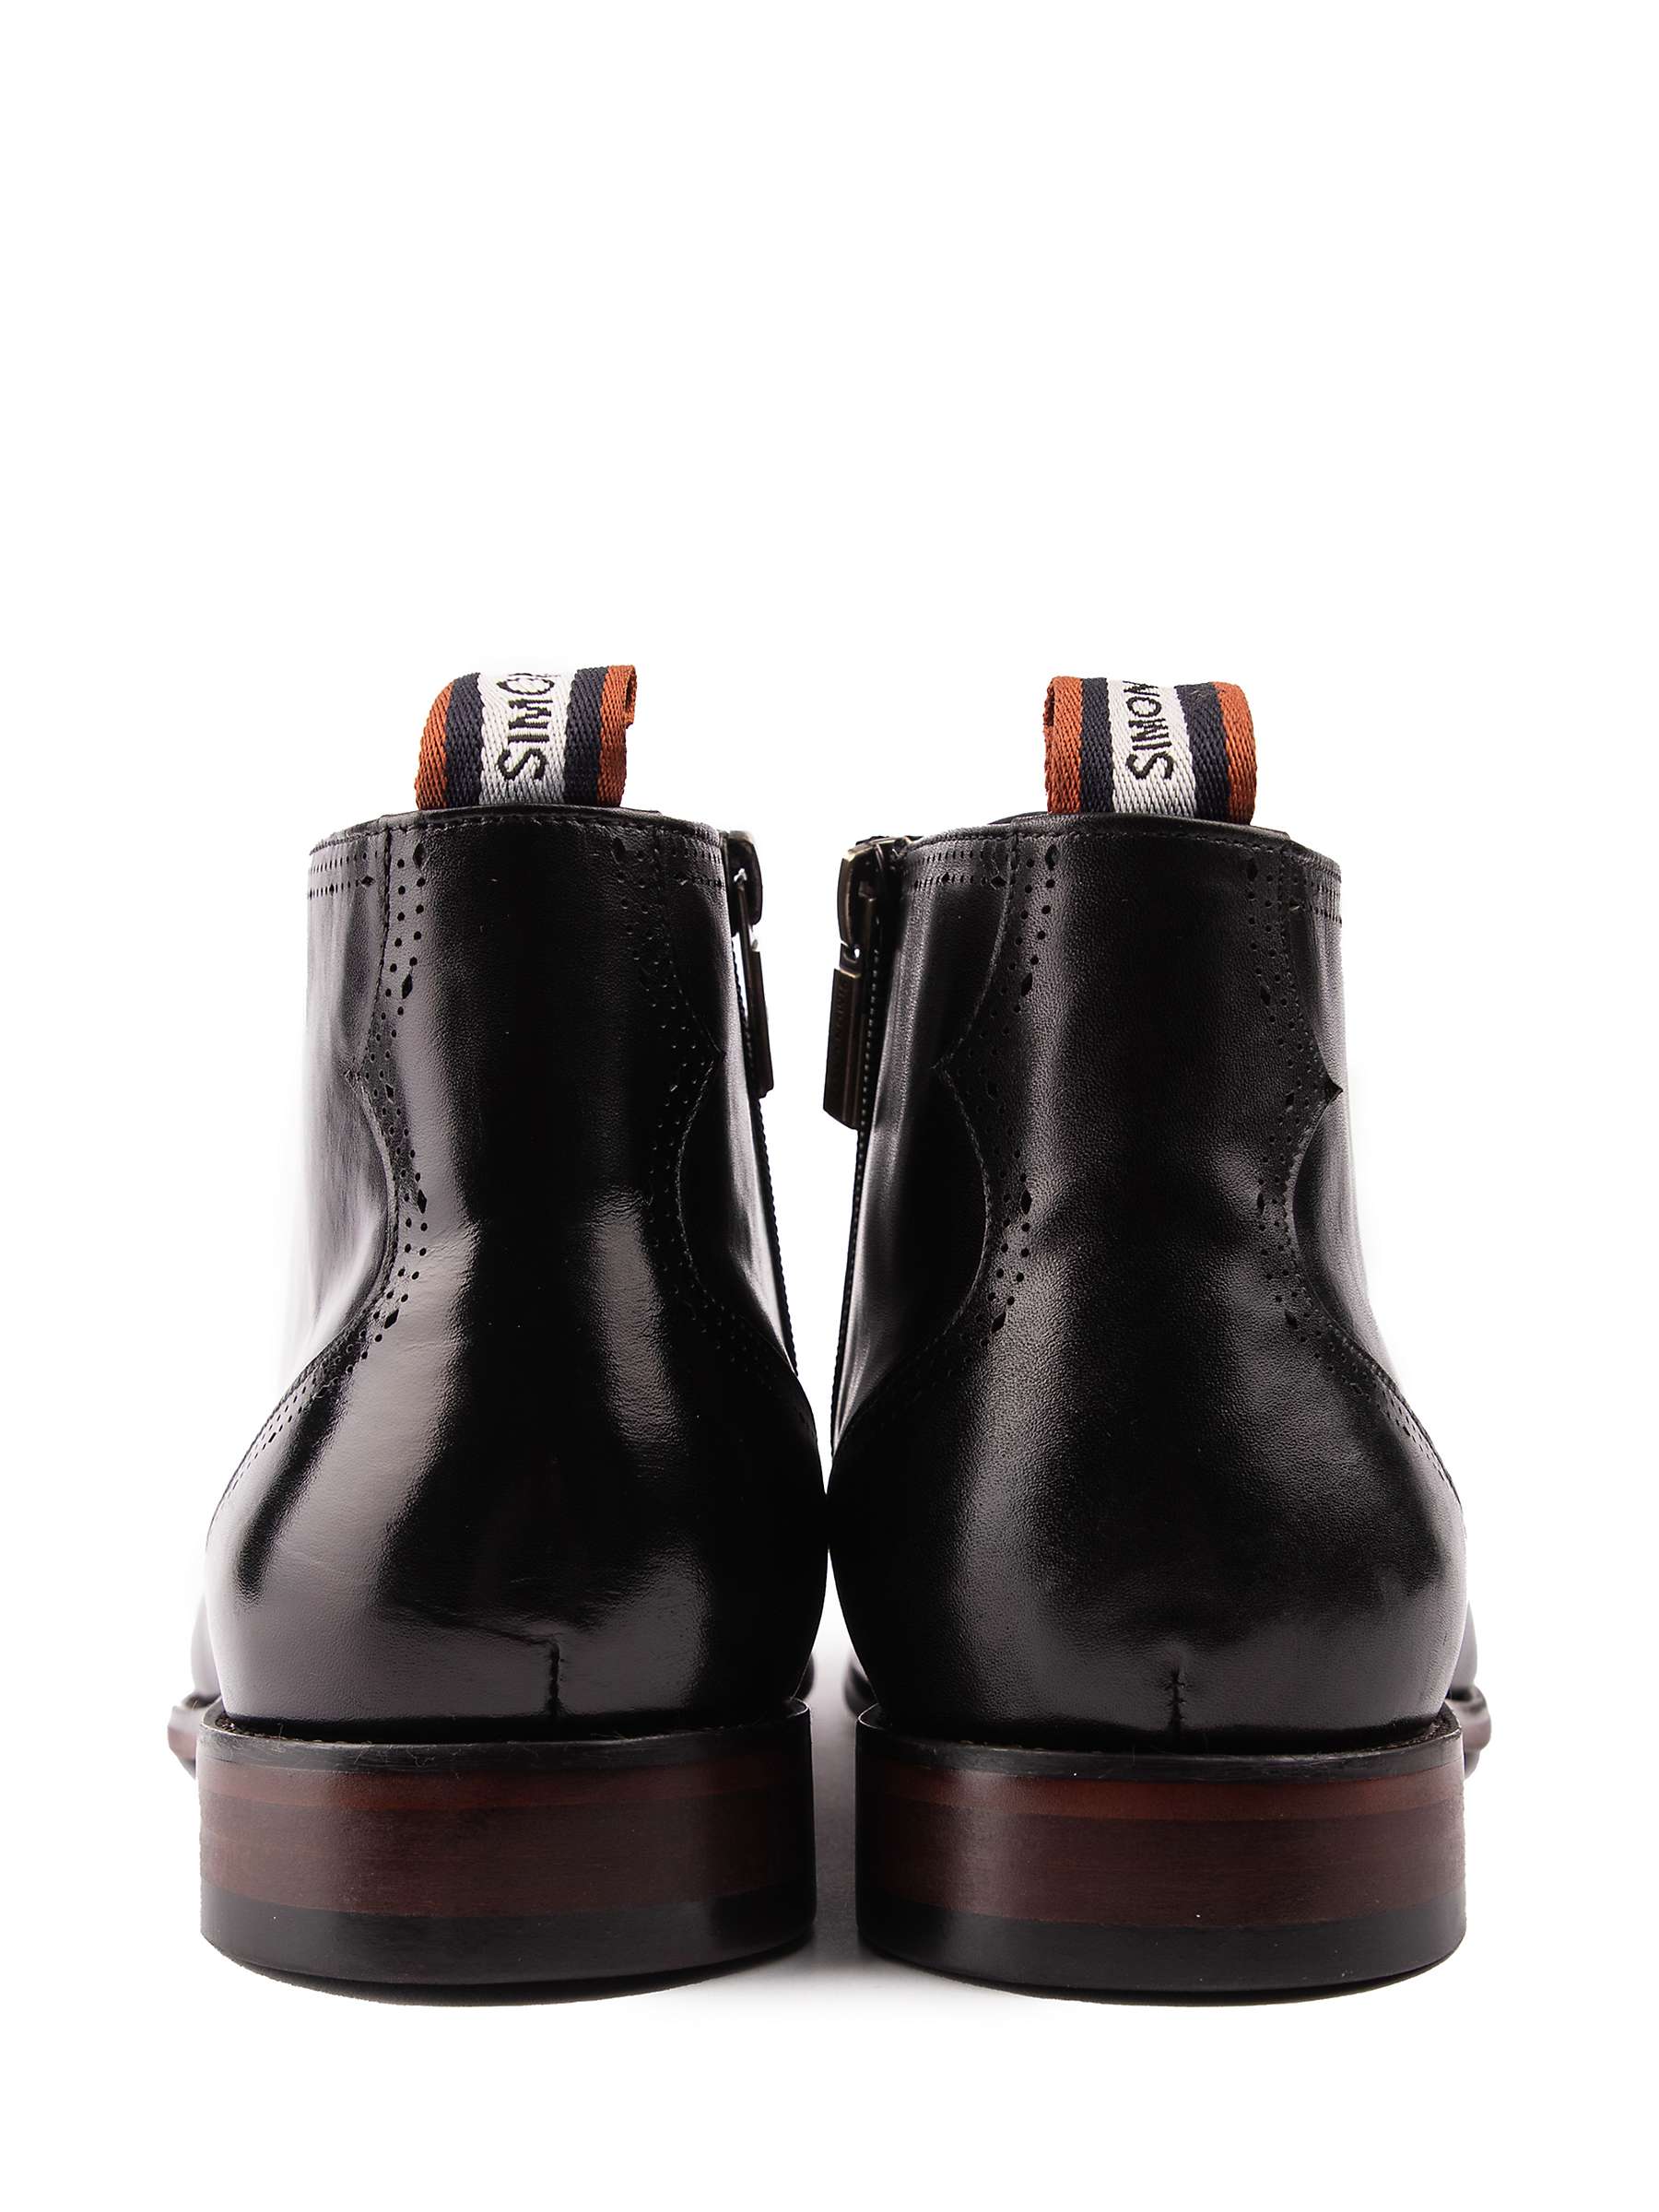 Buy Simon Carter Whisker Leather Chukka Boots, Black Online at johnlewis.com